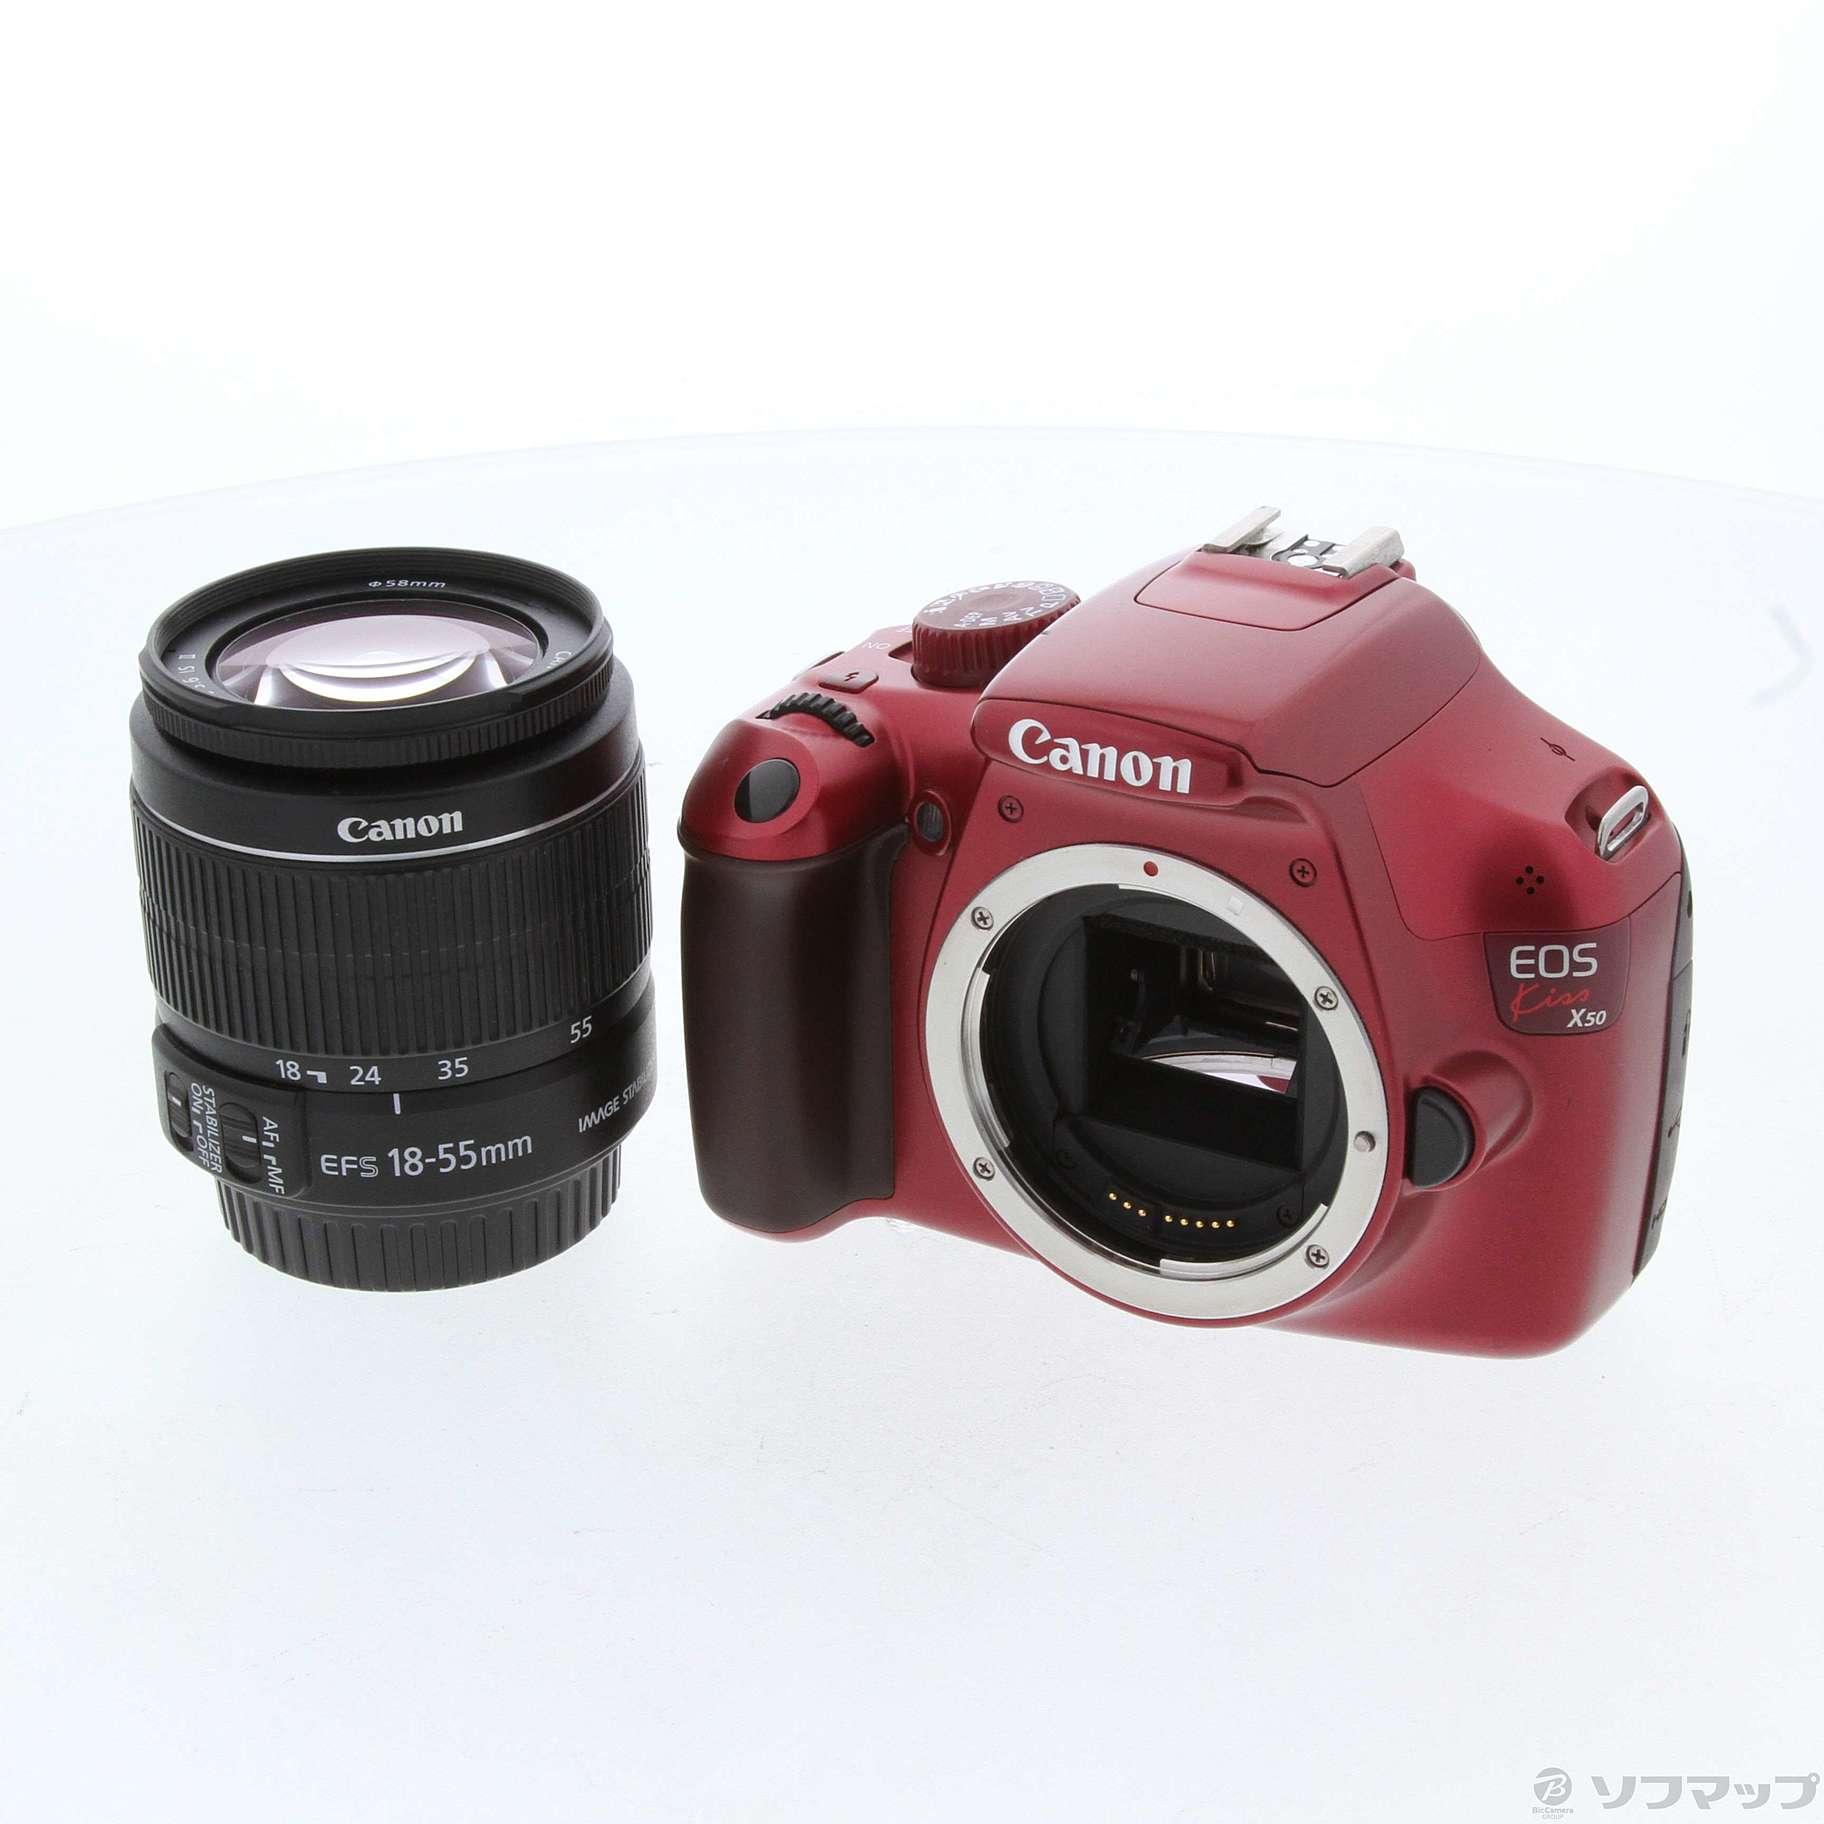 Canon EOS KISS X50 - デジタルカメラ